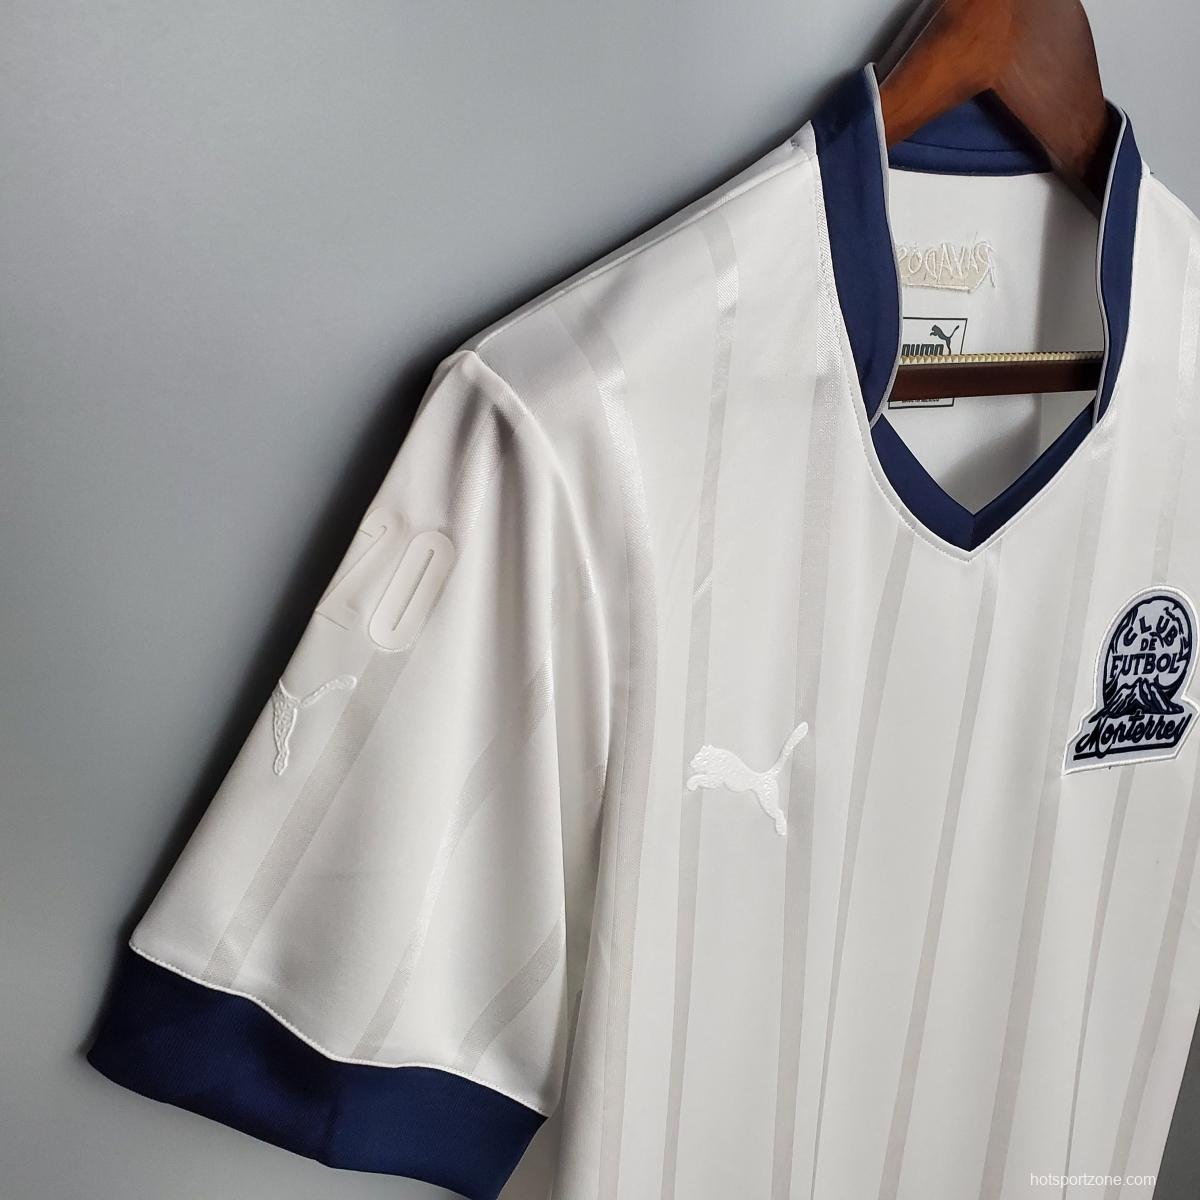 Monterrey 75th Anniversary Edition White Soccer Jersey